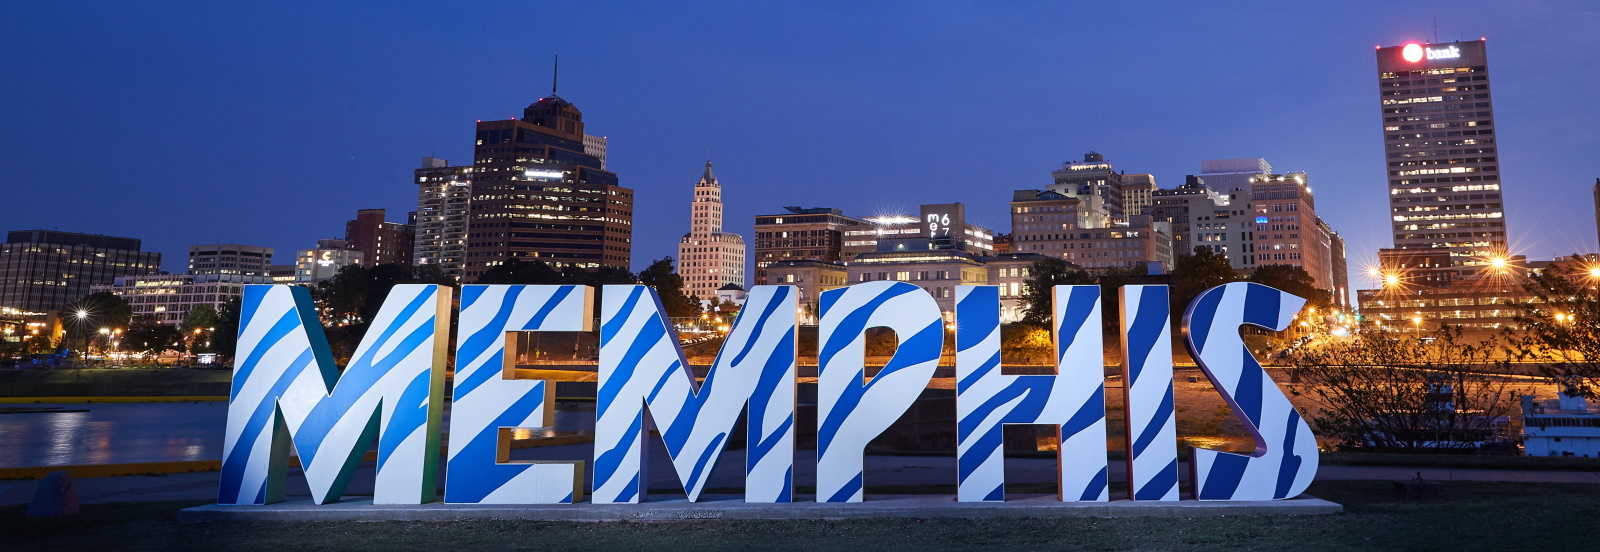 downtown Memphis sign